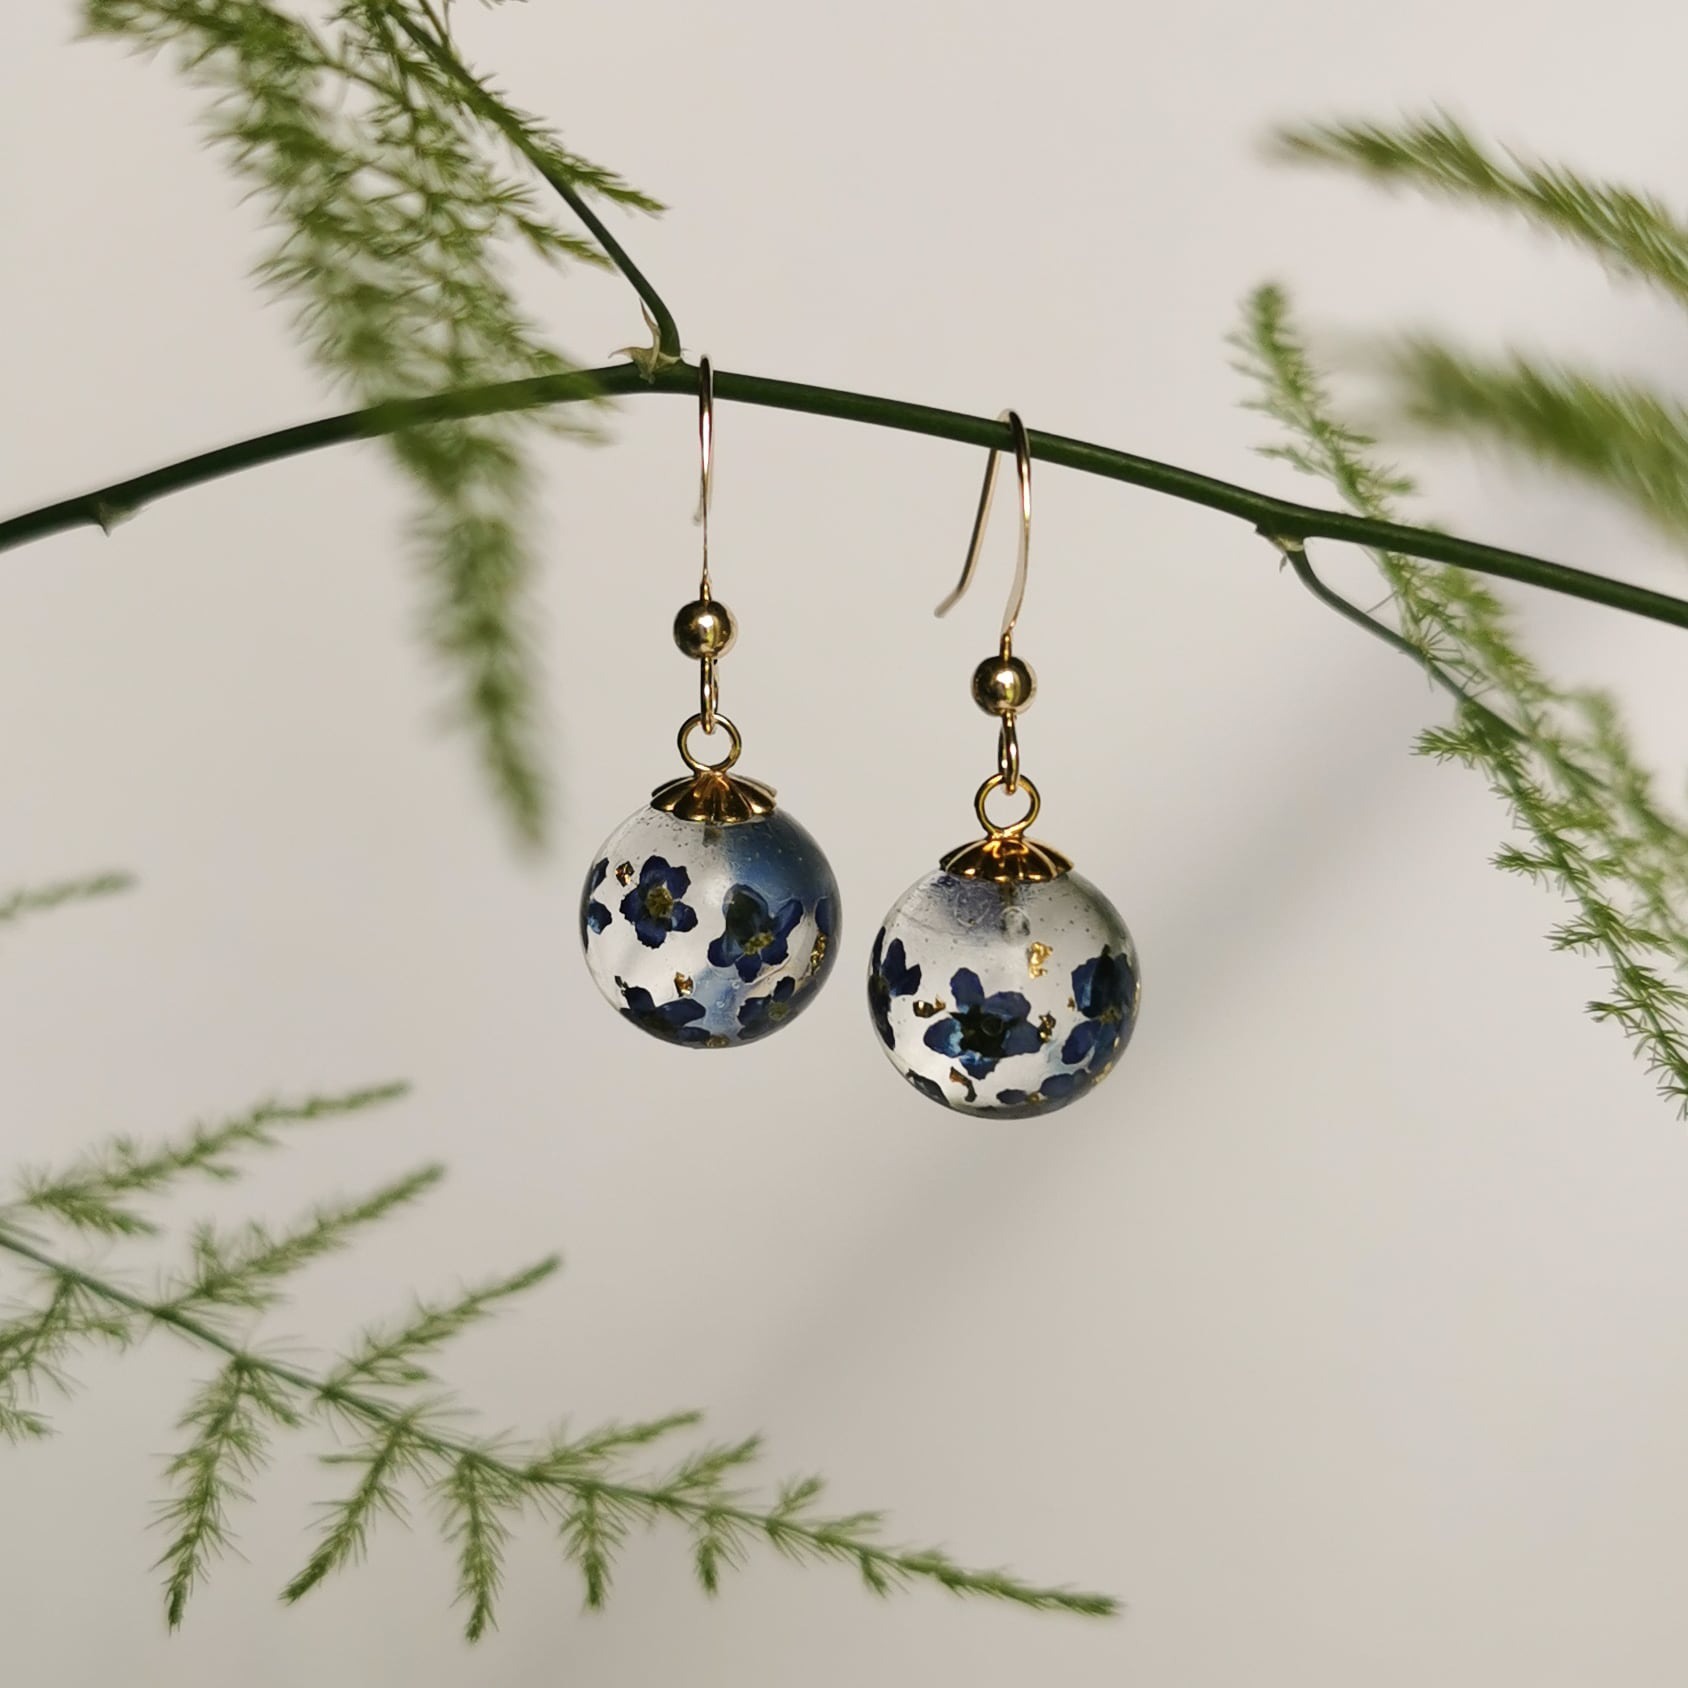 Boucles d'oreilles perles de fleurs de myosotis bleu, crochets en or